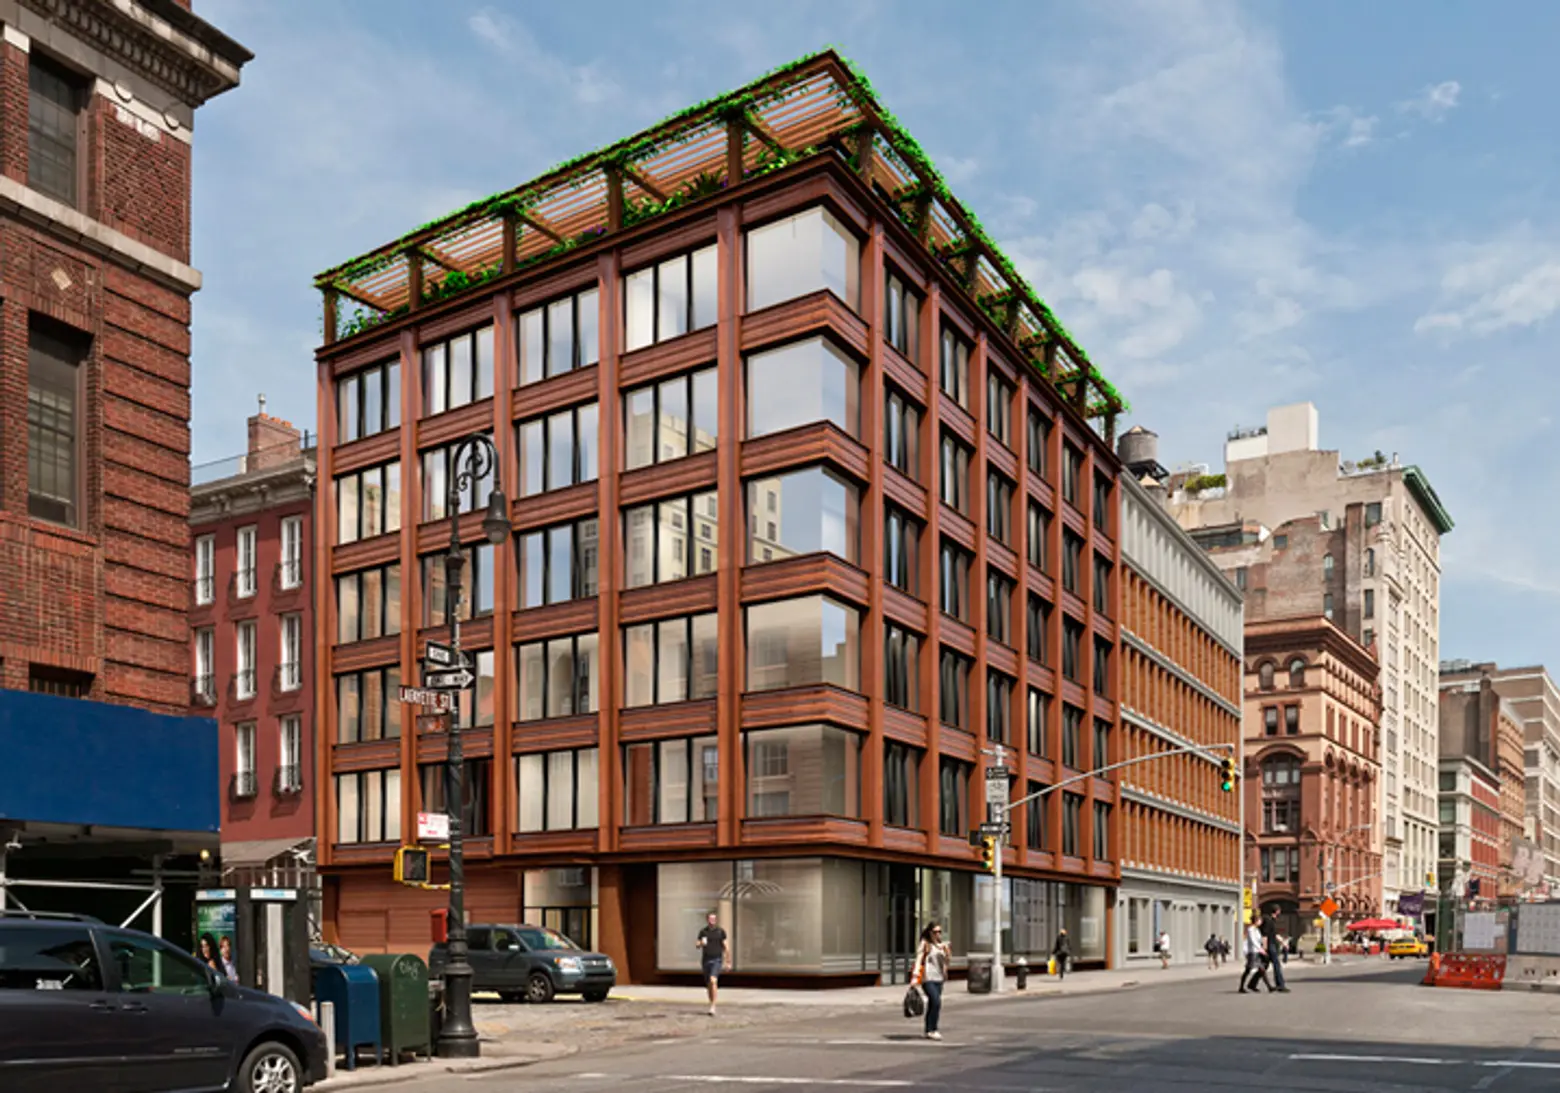 Gateways: Filling in the Architectural Gaps Along Cobblestoned Bond Street